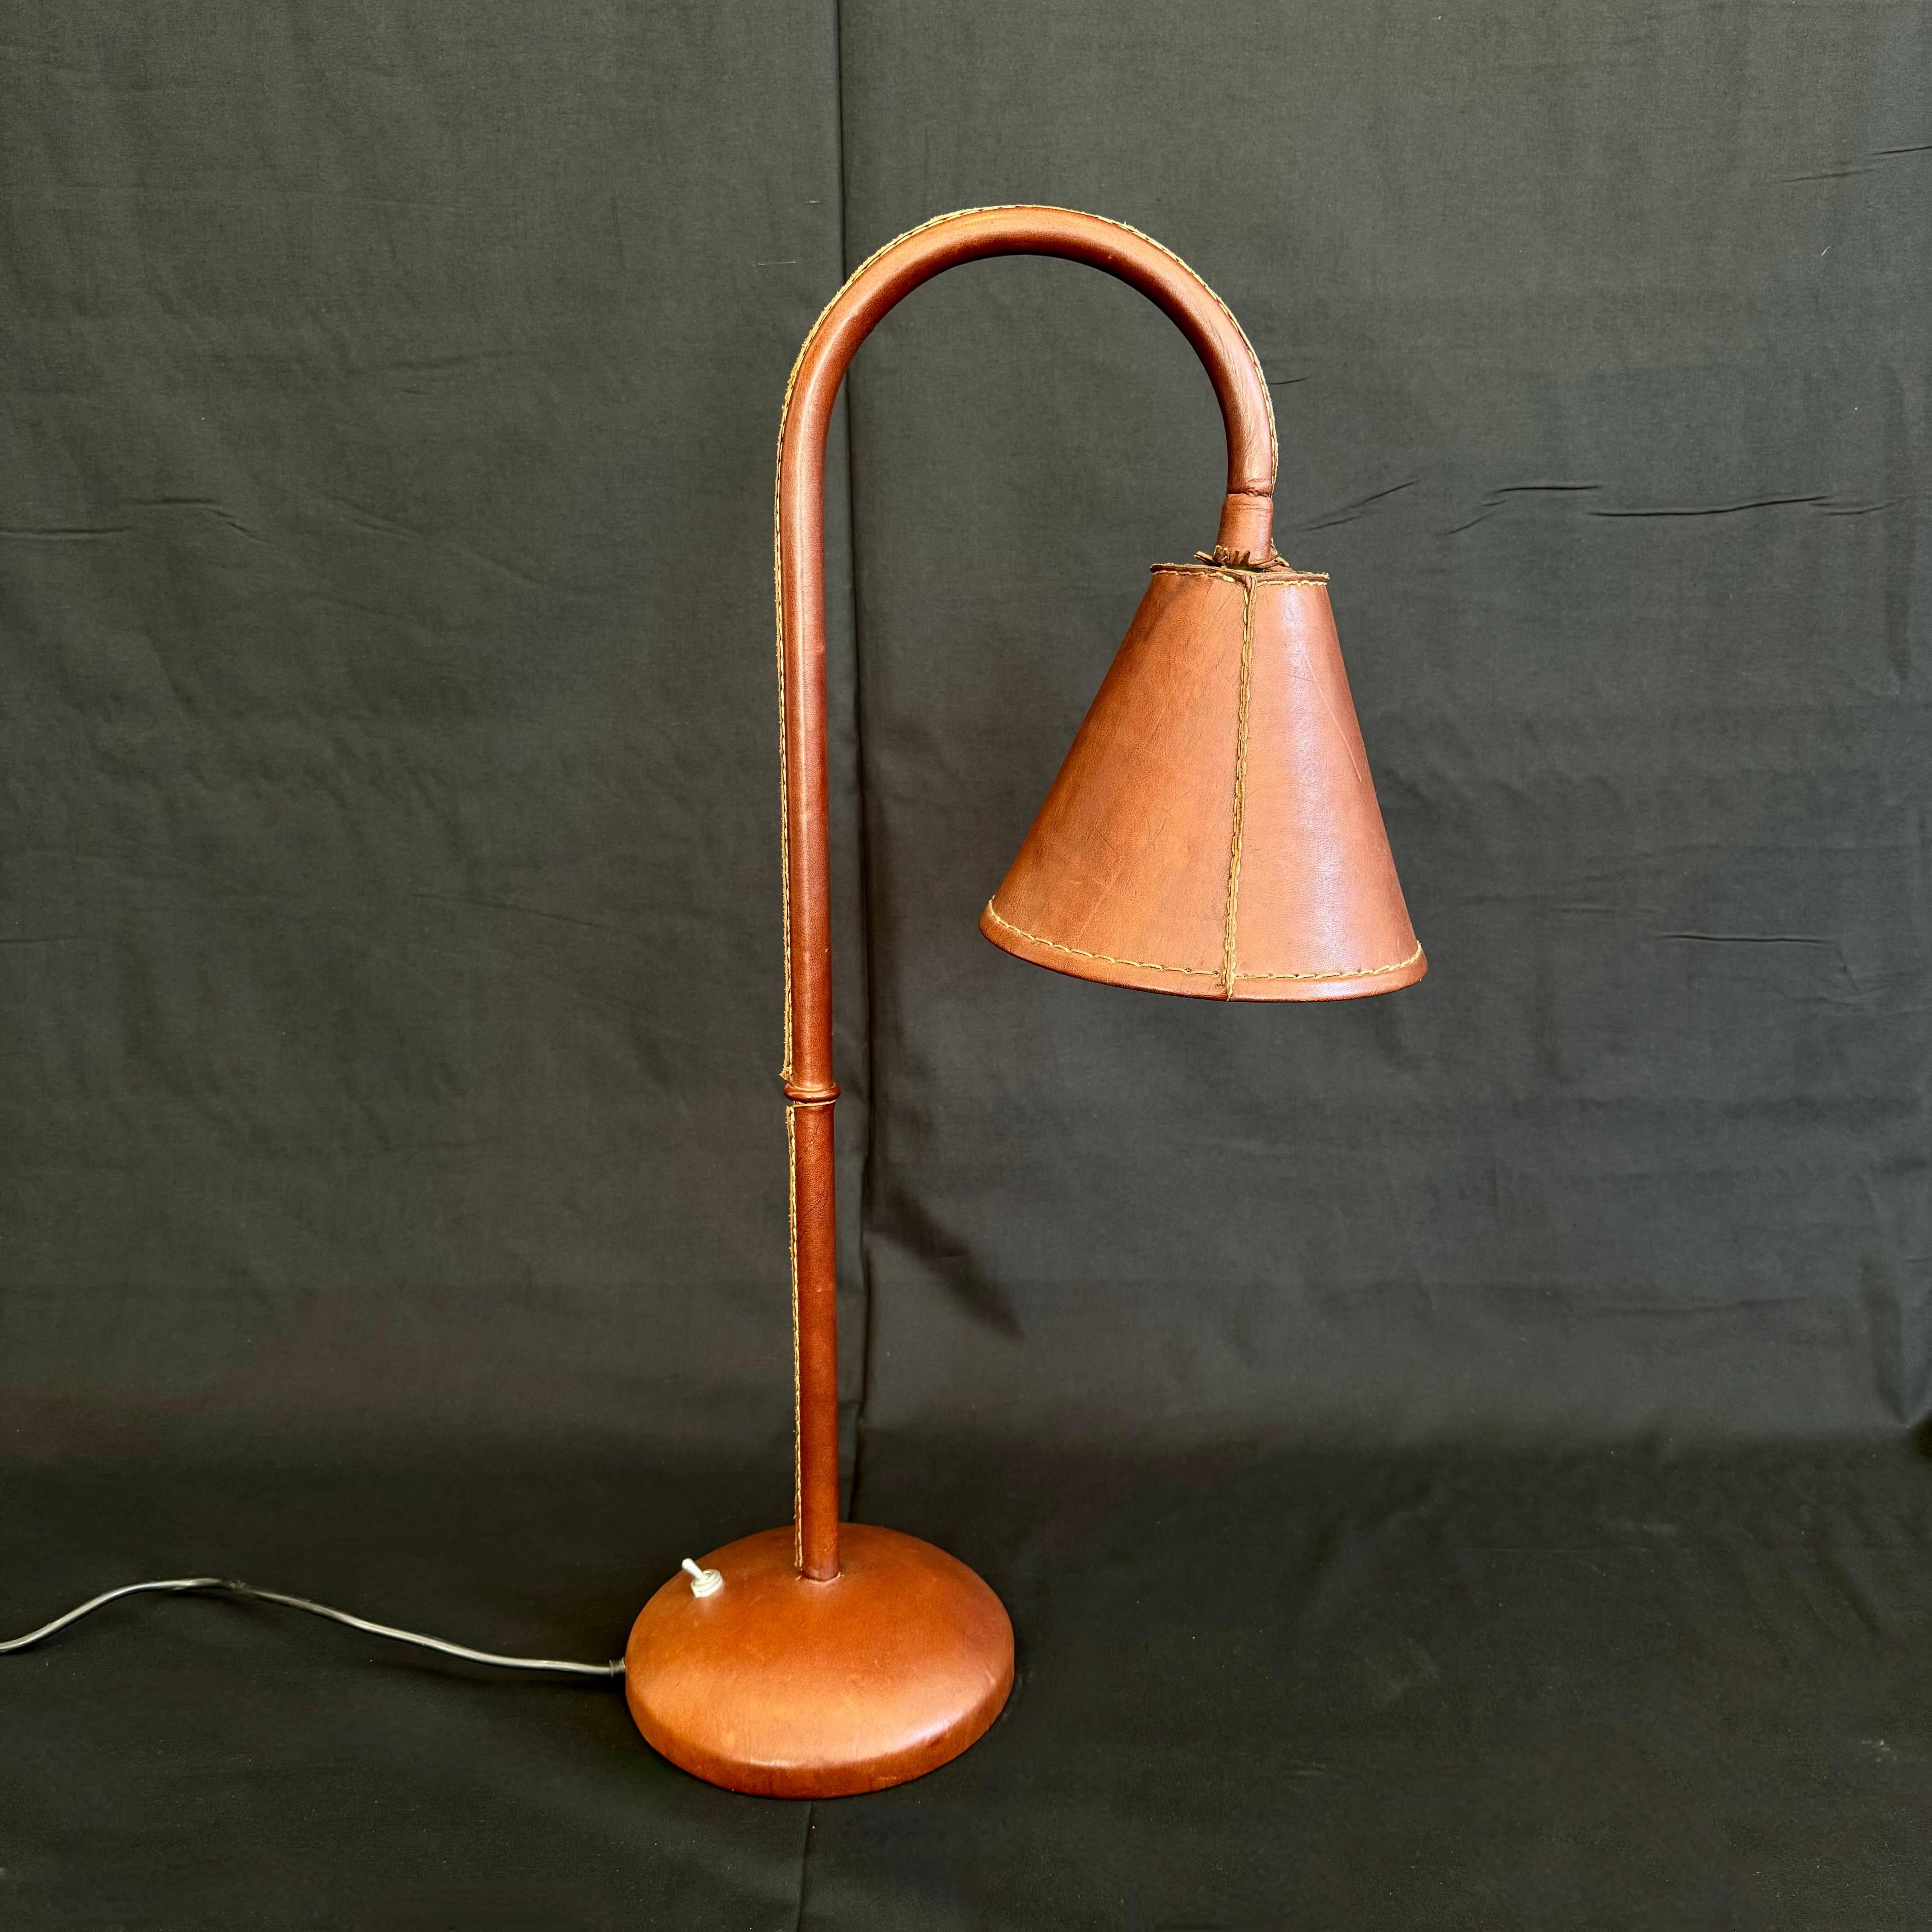 Brown Leather Table Lamp im Stil von Jacques Adnet, 1970er Jahre Spanien (Ende des 20. Jahrhunderts) im Angebot